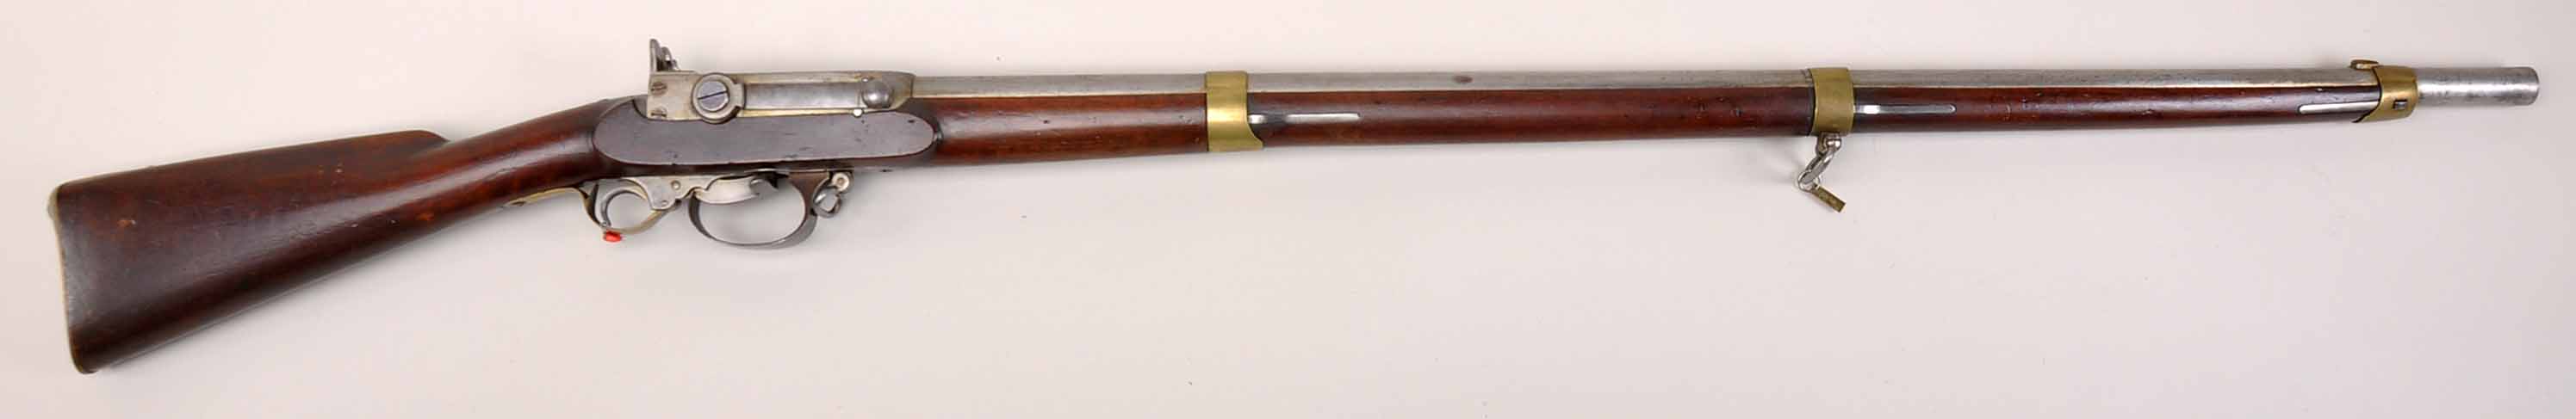 ./guns/rifle/bilder/Rifle-Kongsberg-Kammerlader-M1842-1-1.JPG